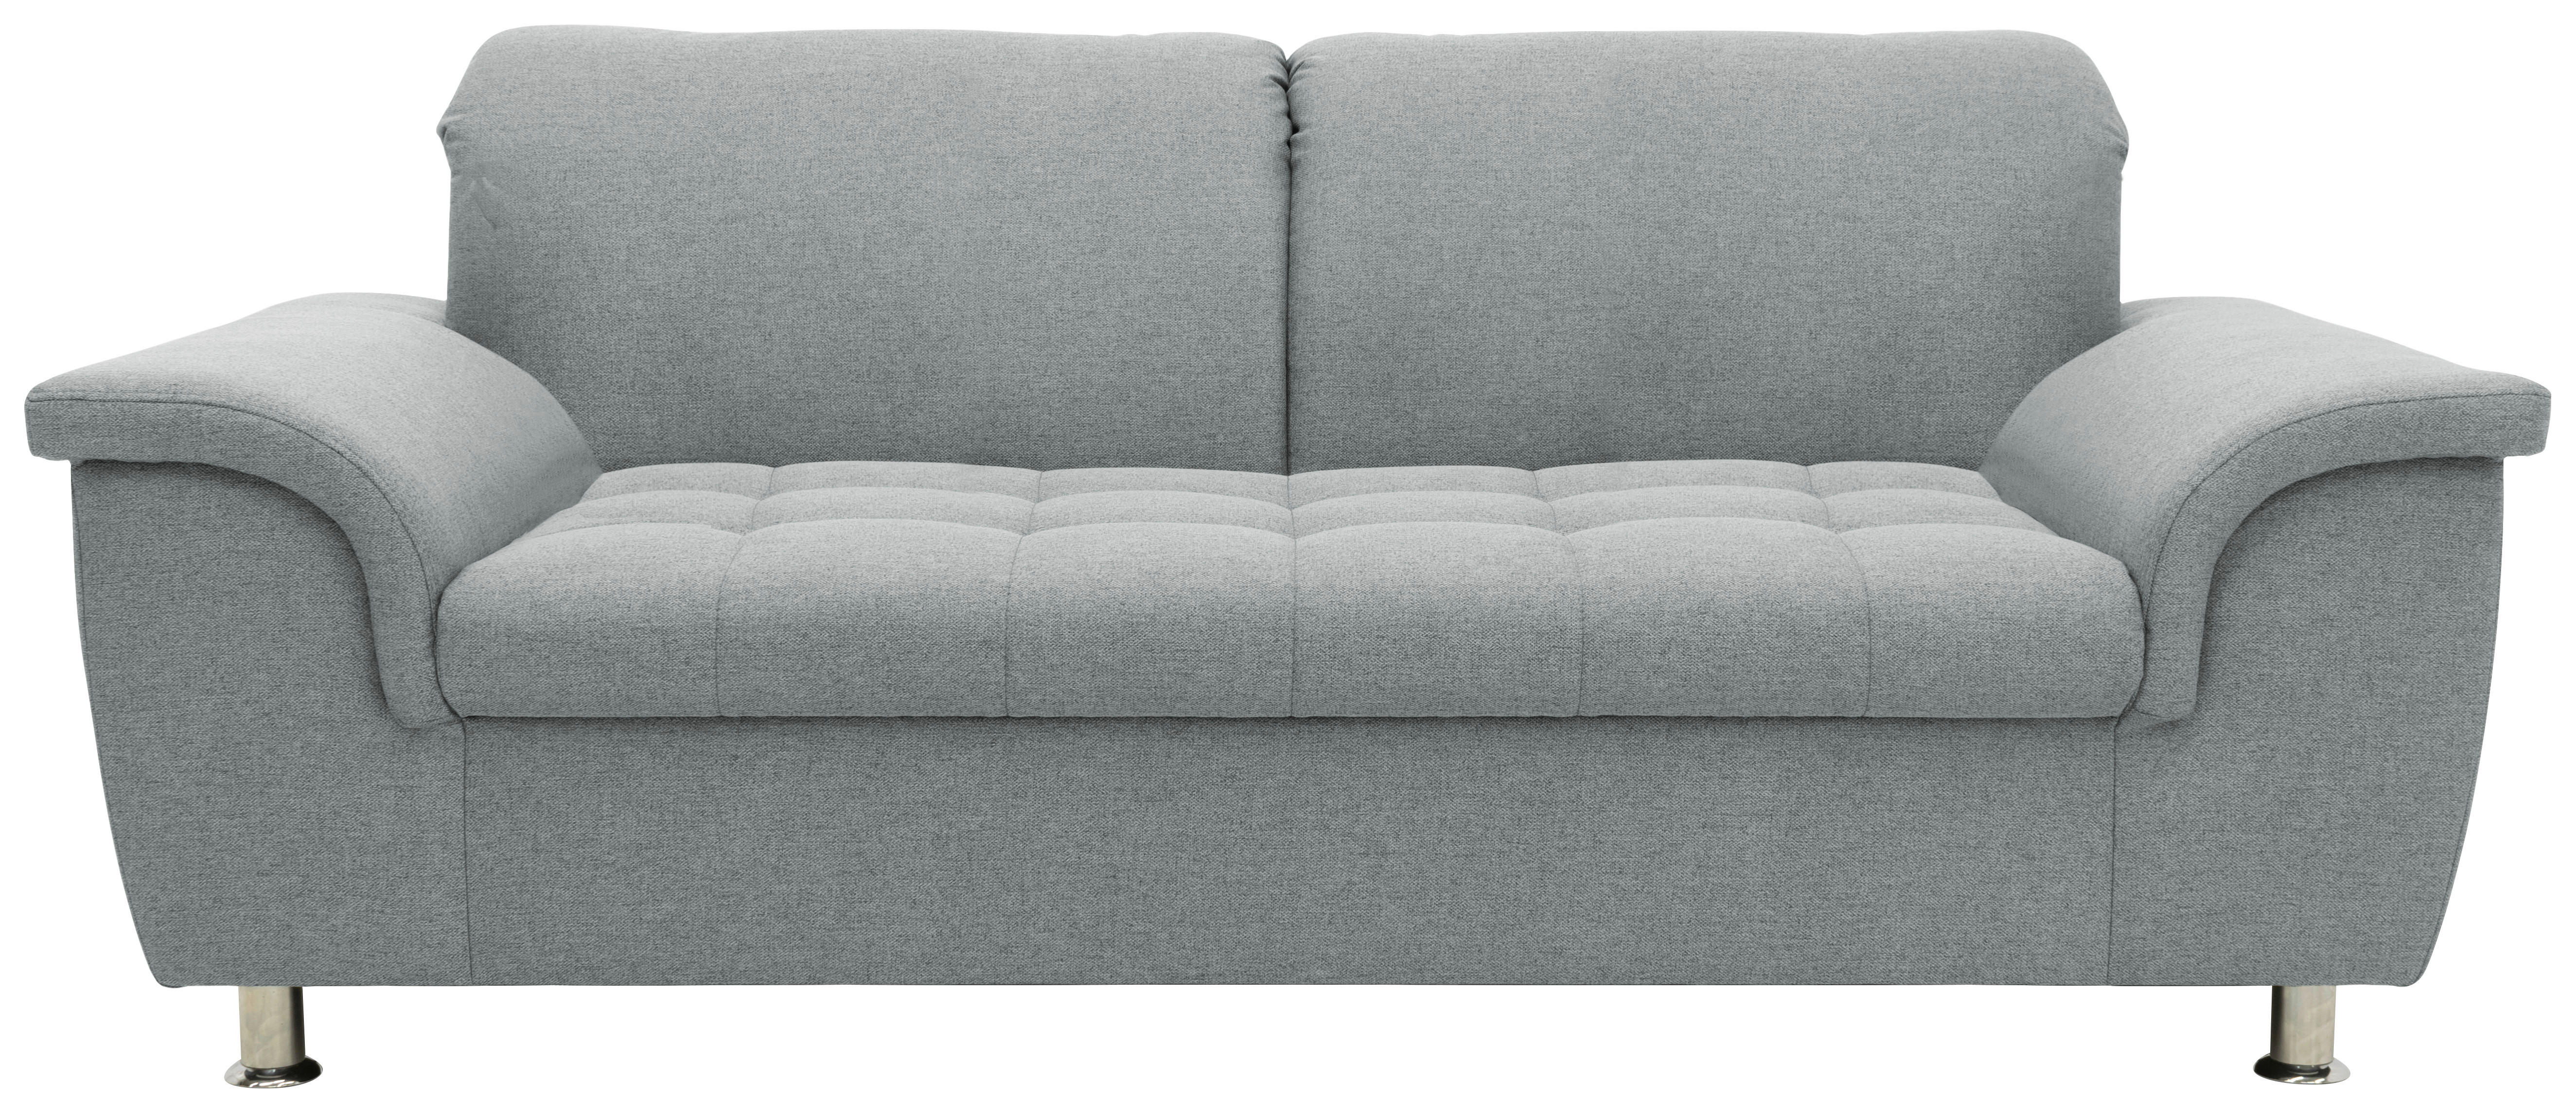 Zweisitzer-Sofa mit Funktion Webstoff Mintgrün  - Chromfarben/Mintgrün, KONVENTIONELL, Textil/Metall (190/81/105cm) - MID.YOU